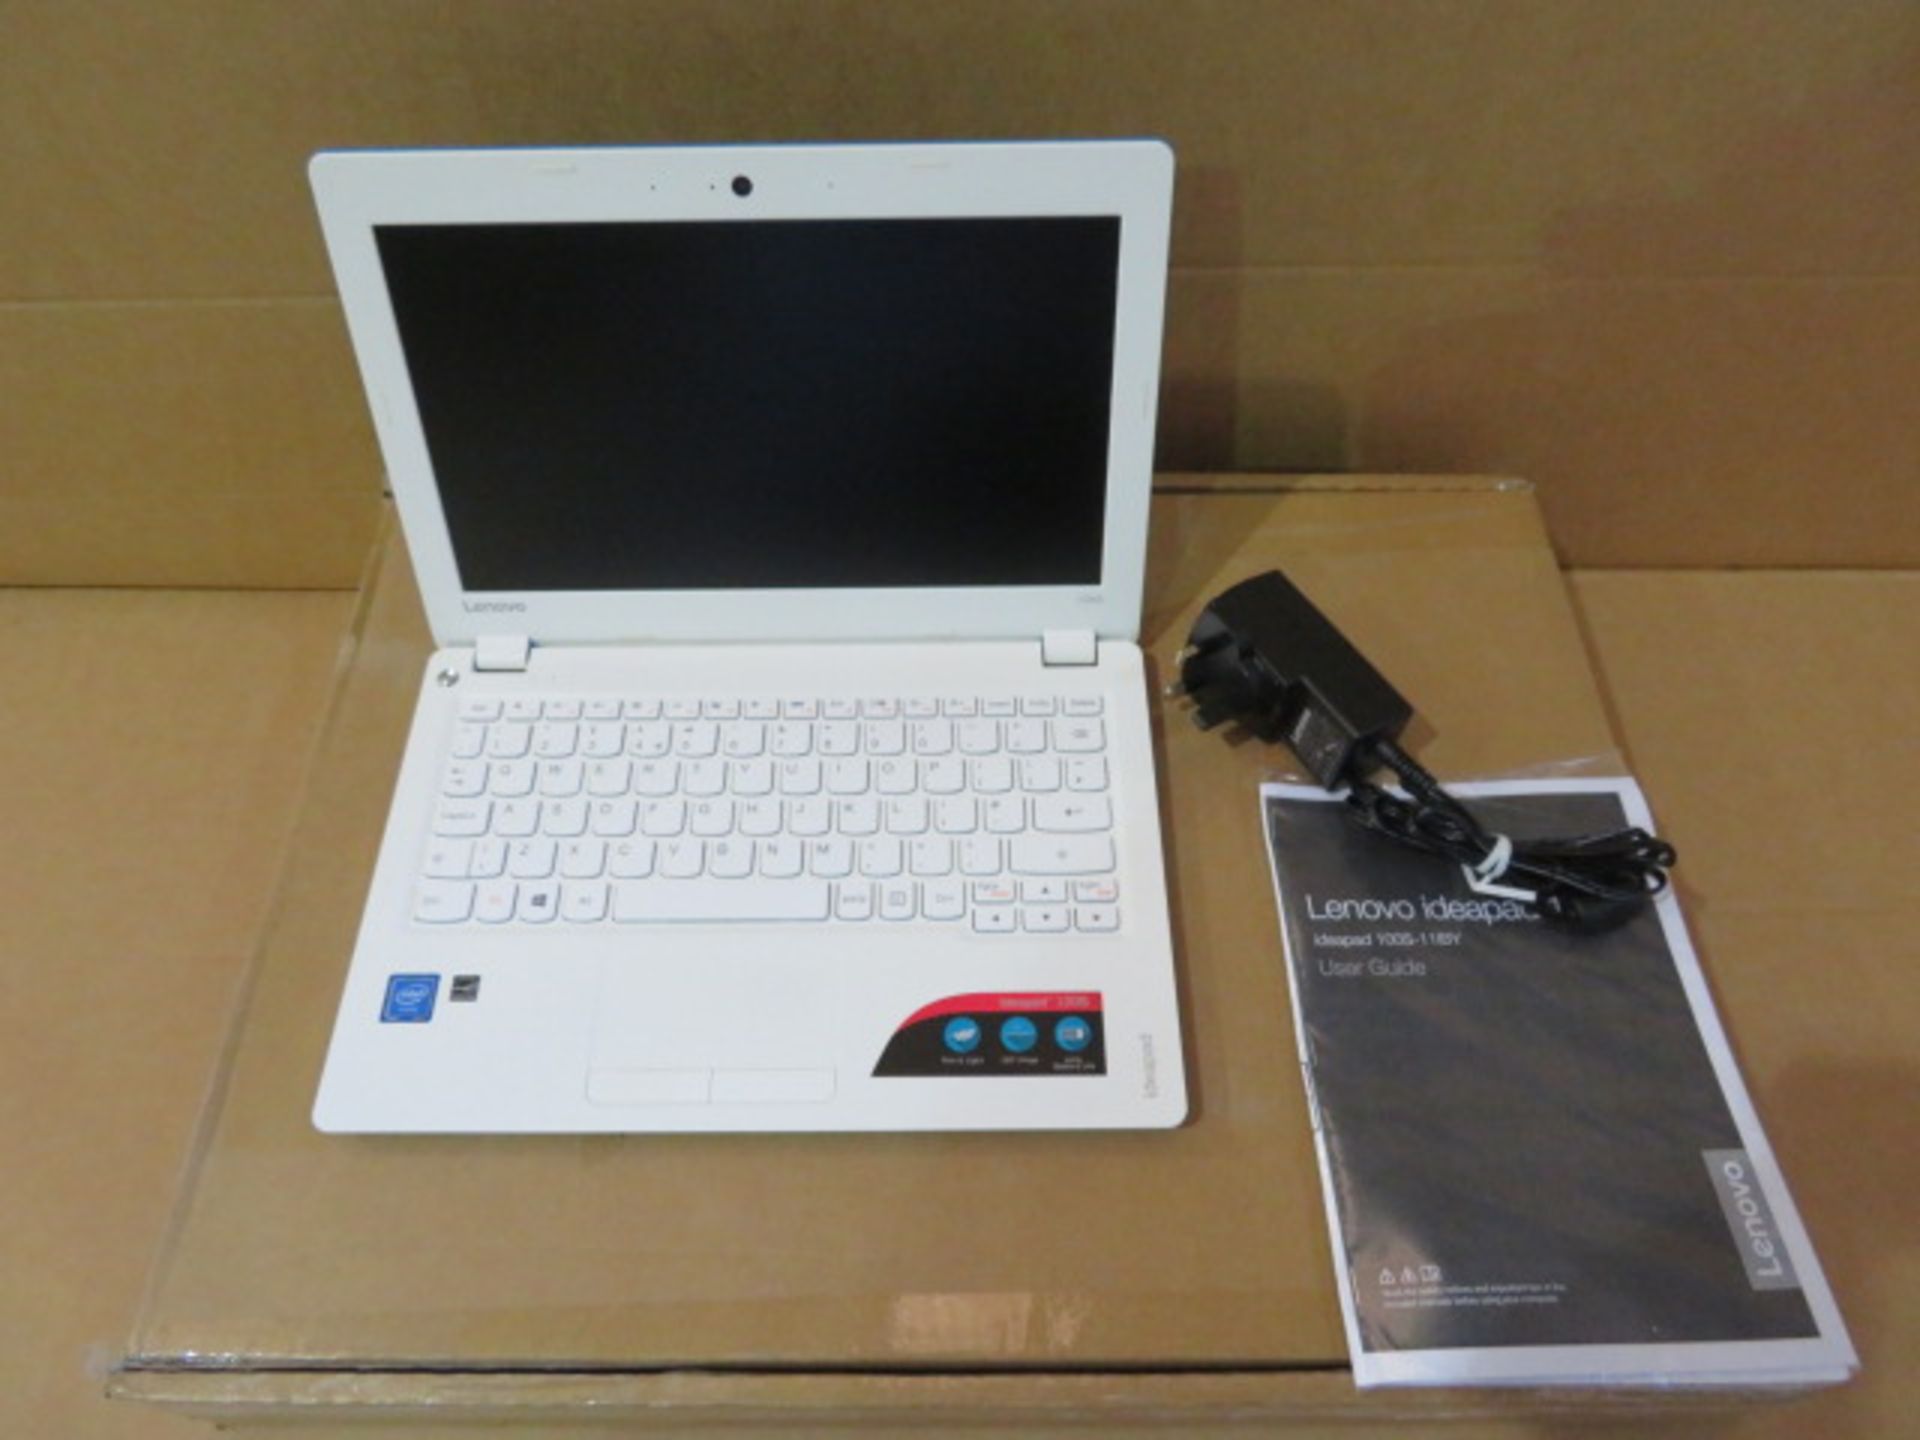 (24) 1 x Grade B - Lenovo Ideapad 110 BLUE 11.6" Laptop Intel Celeron N3060, 2GB RAM, 32GB - Image 3 of 3